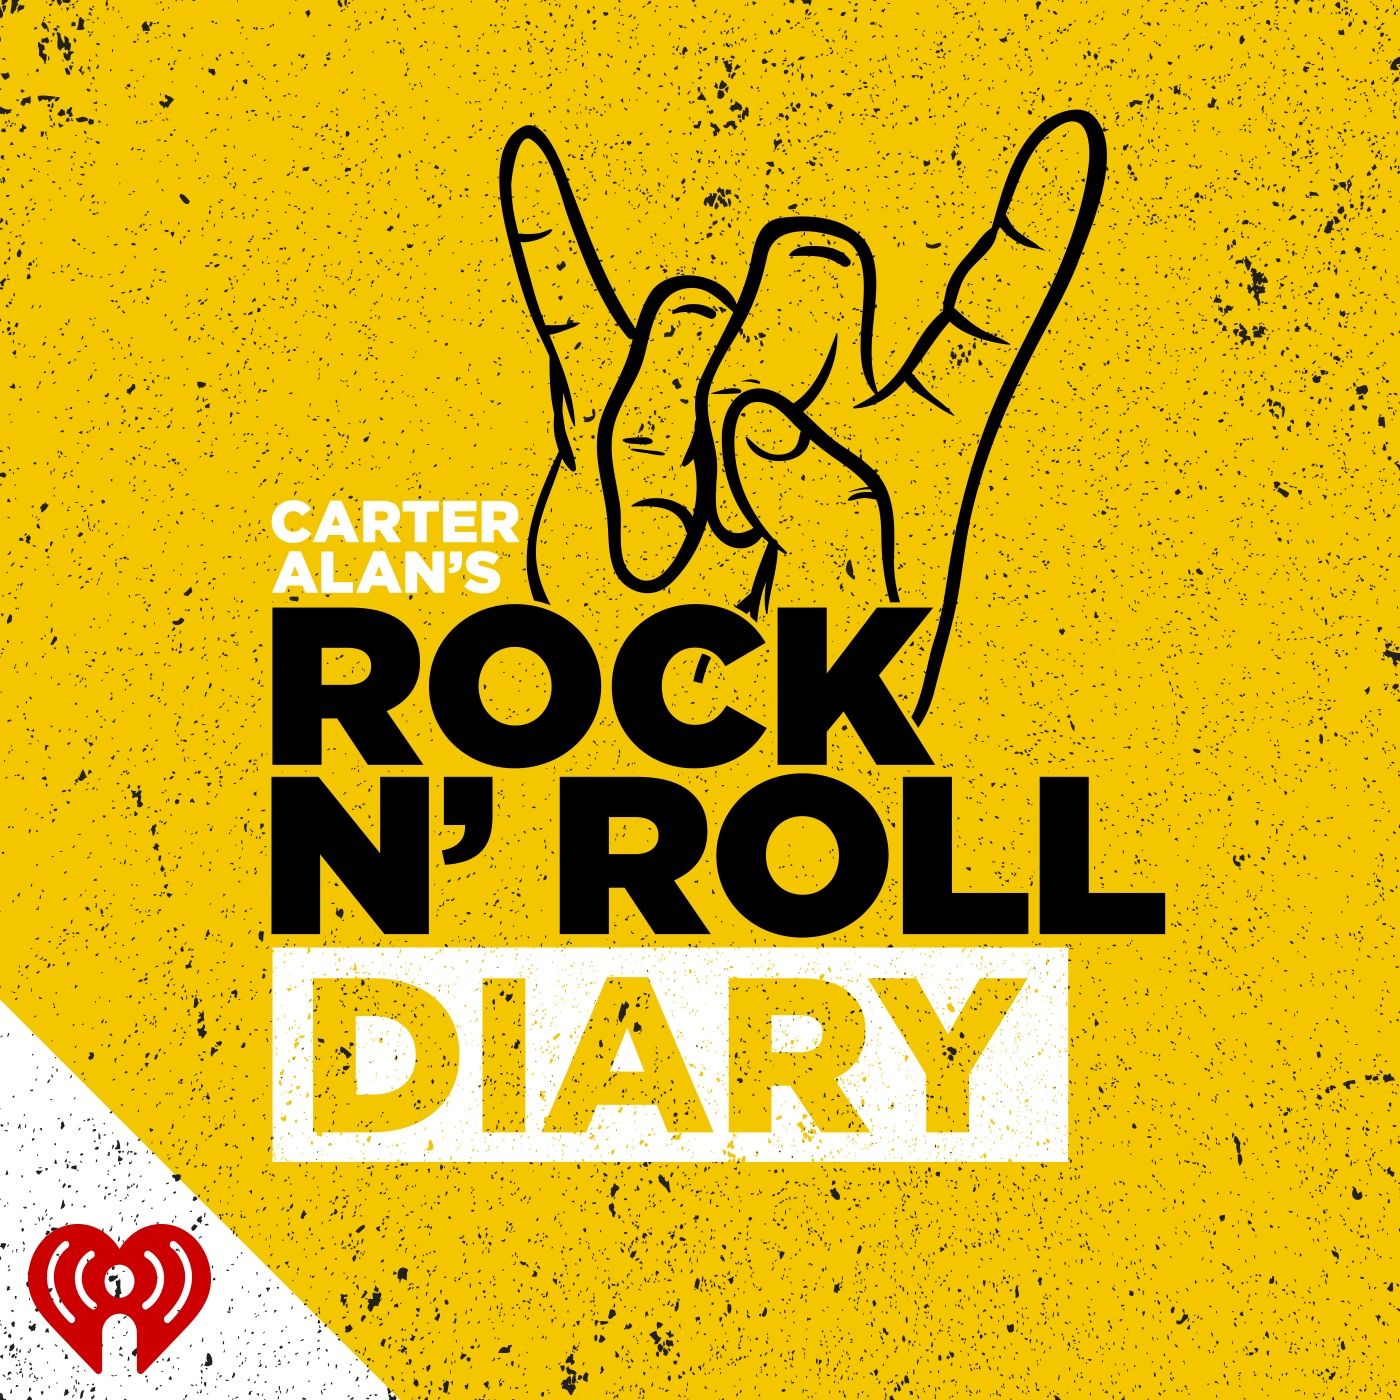 Carter Alan’s Rock N’ Roll Diary